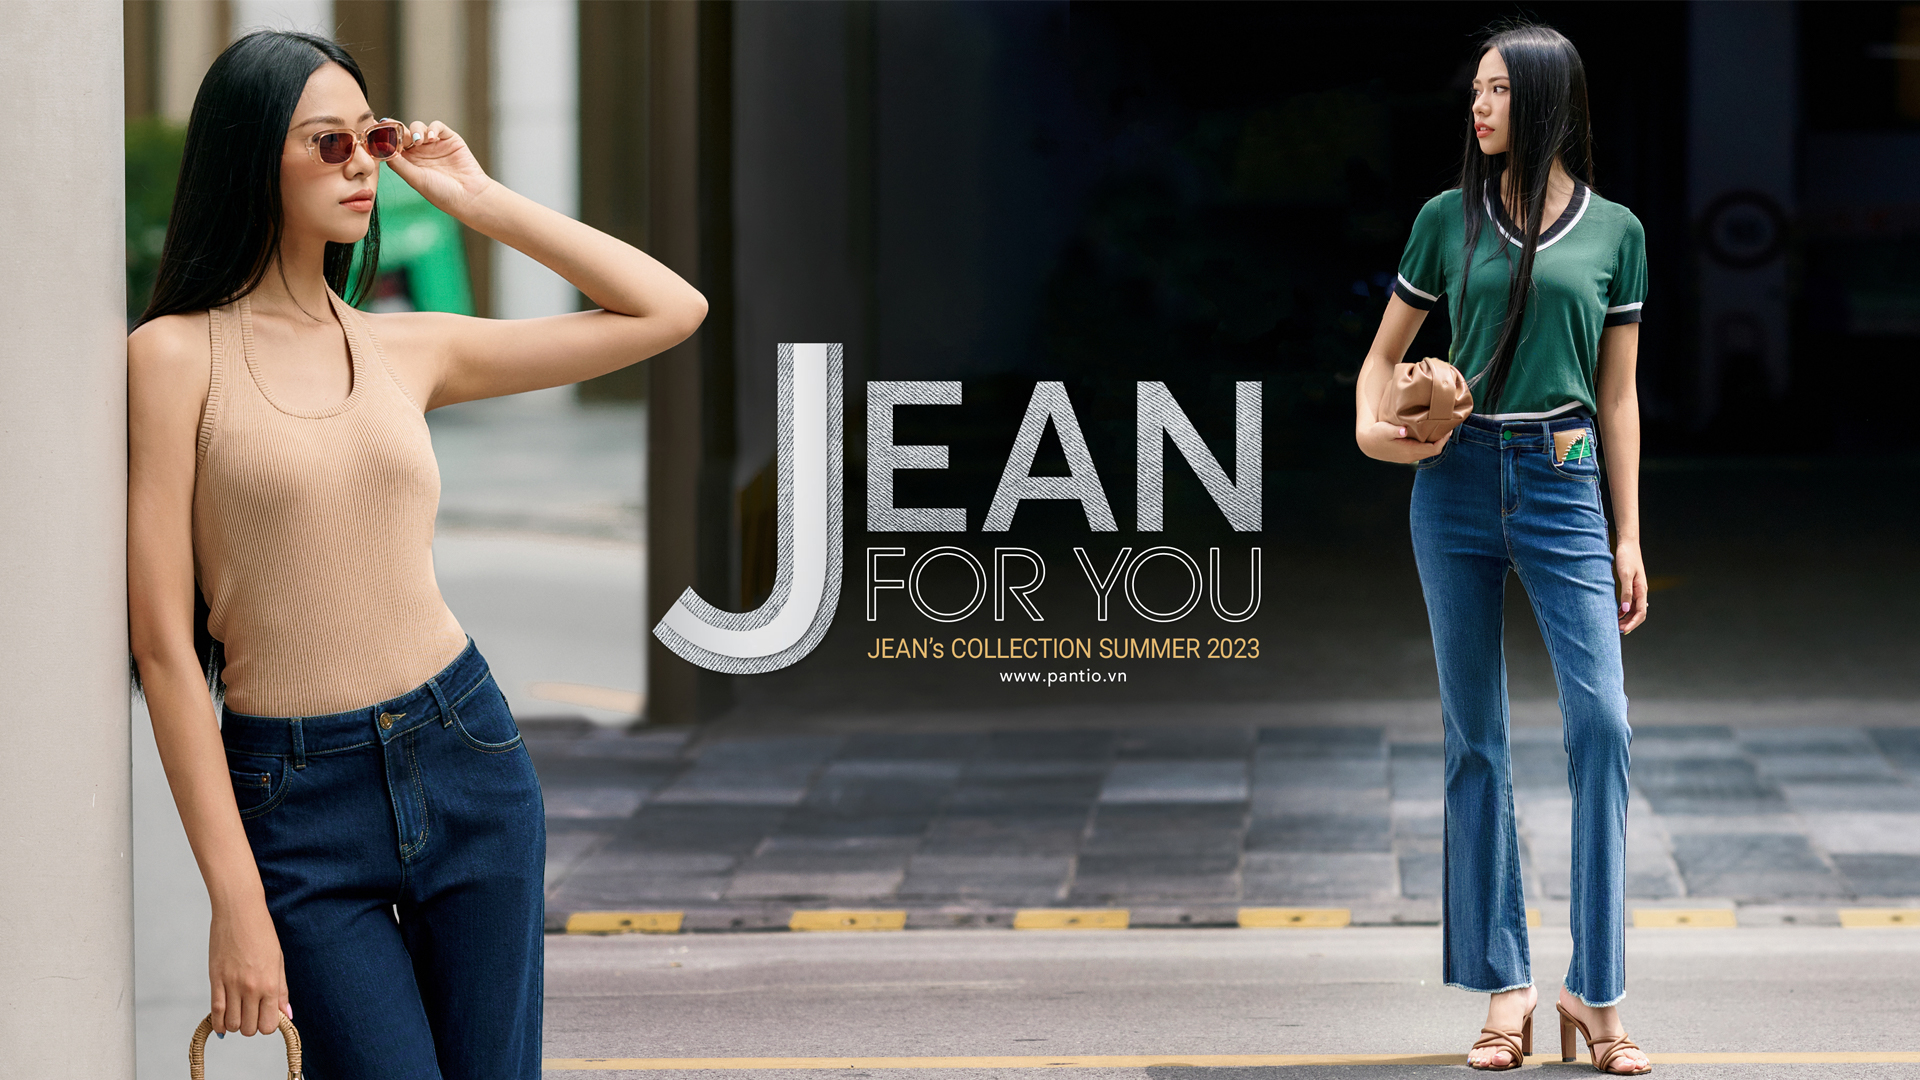 mini-lookbook-jean-for-you-001